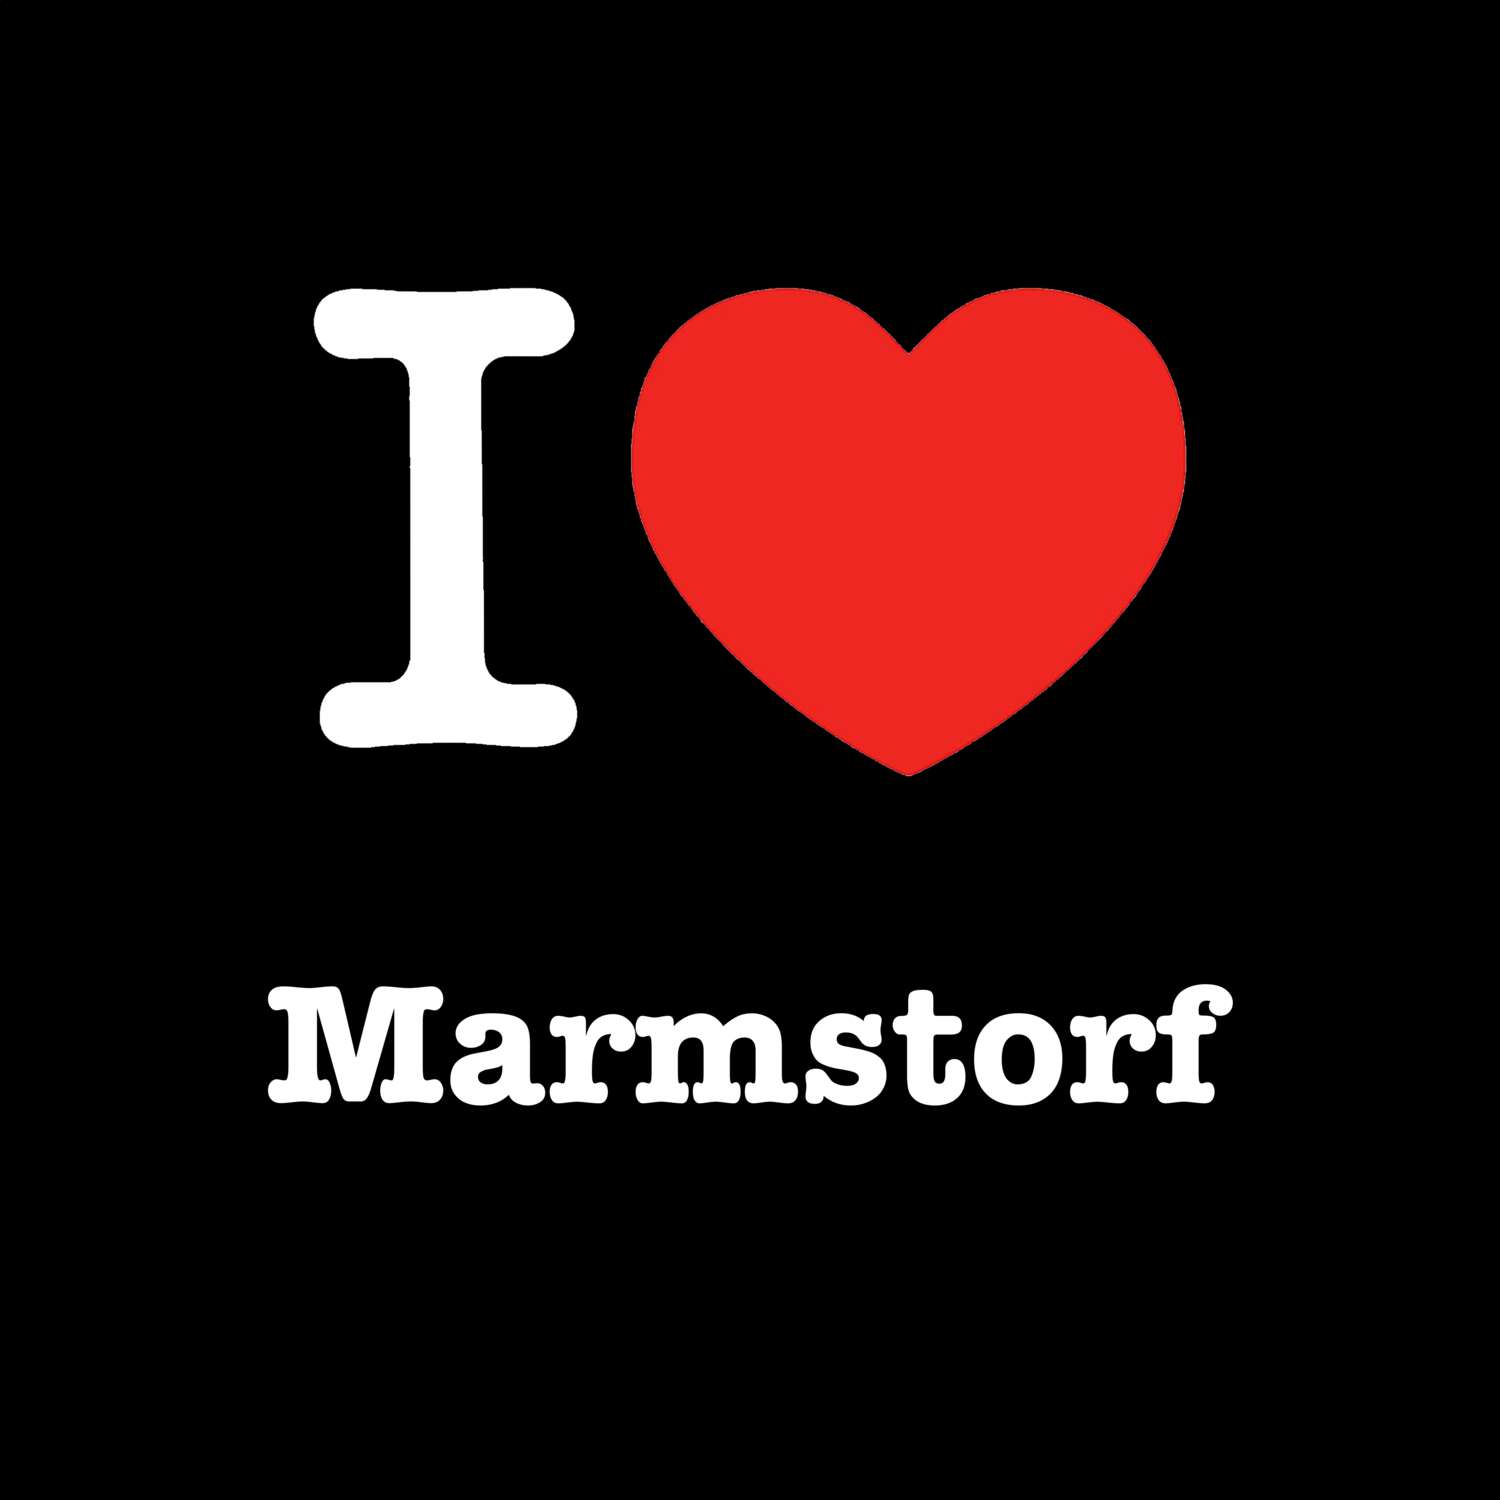 Marmstorf T-Shirt »I love«